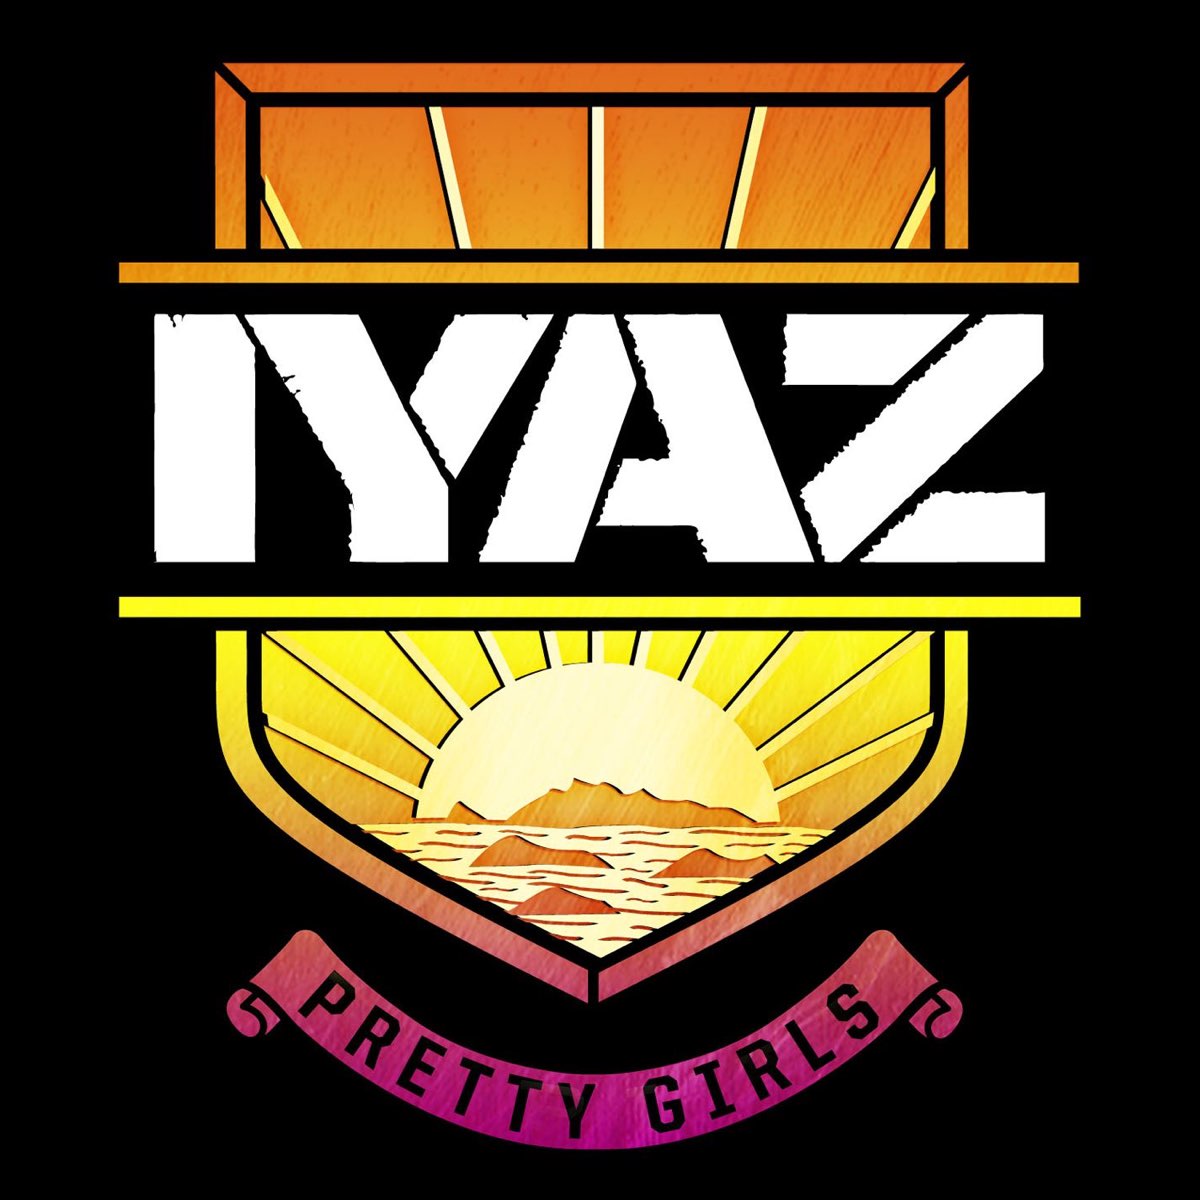 Iyaz featuring Travie McCoy — Pretty Girls cover artwork